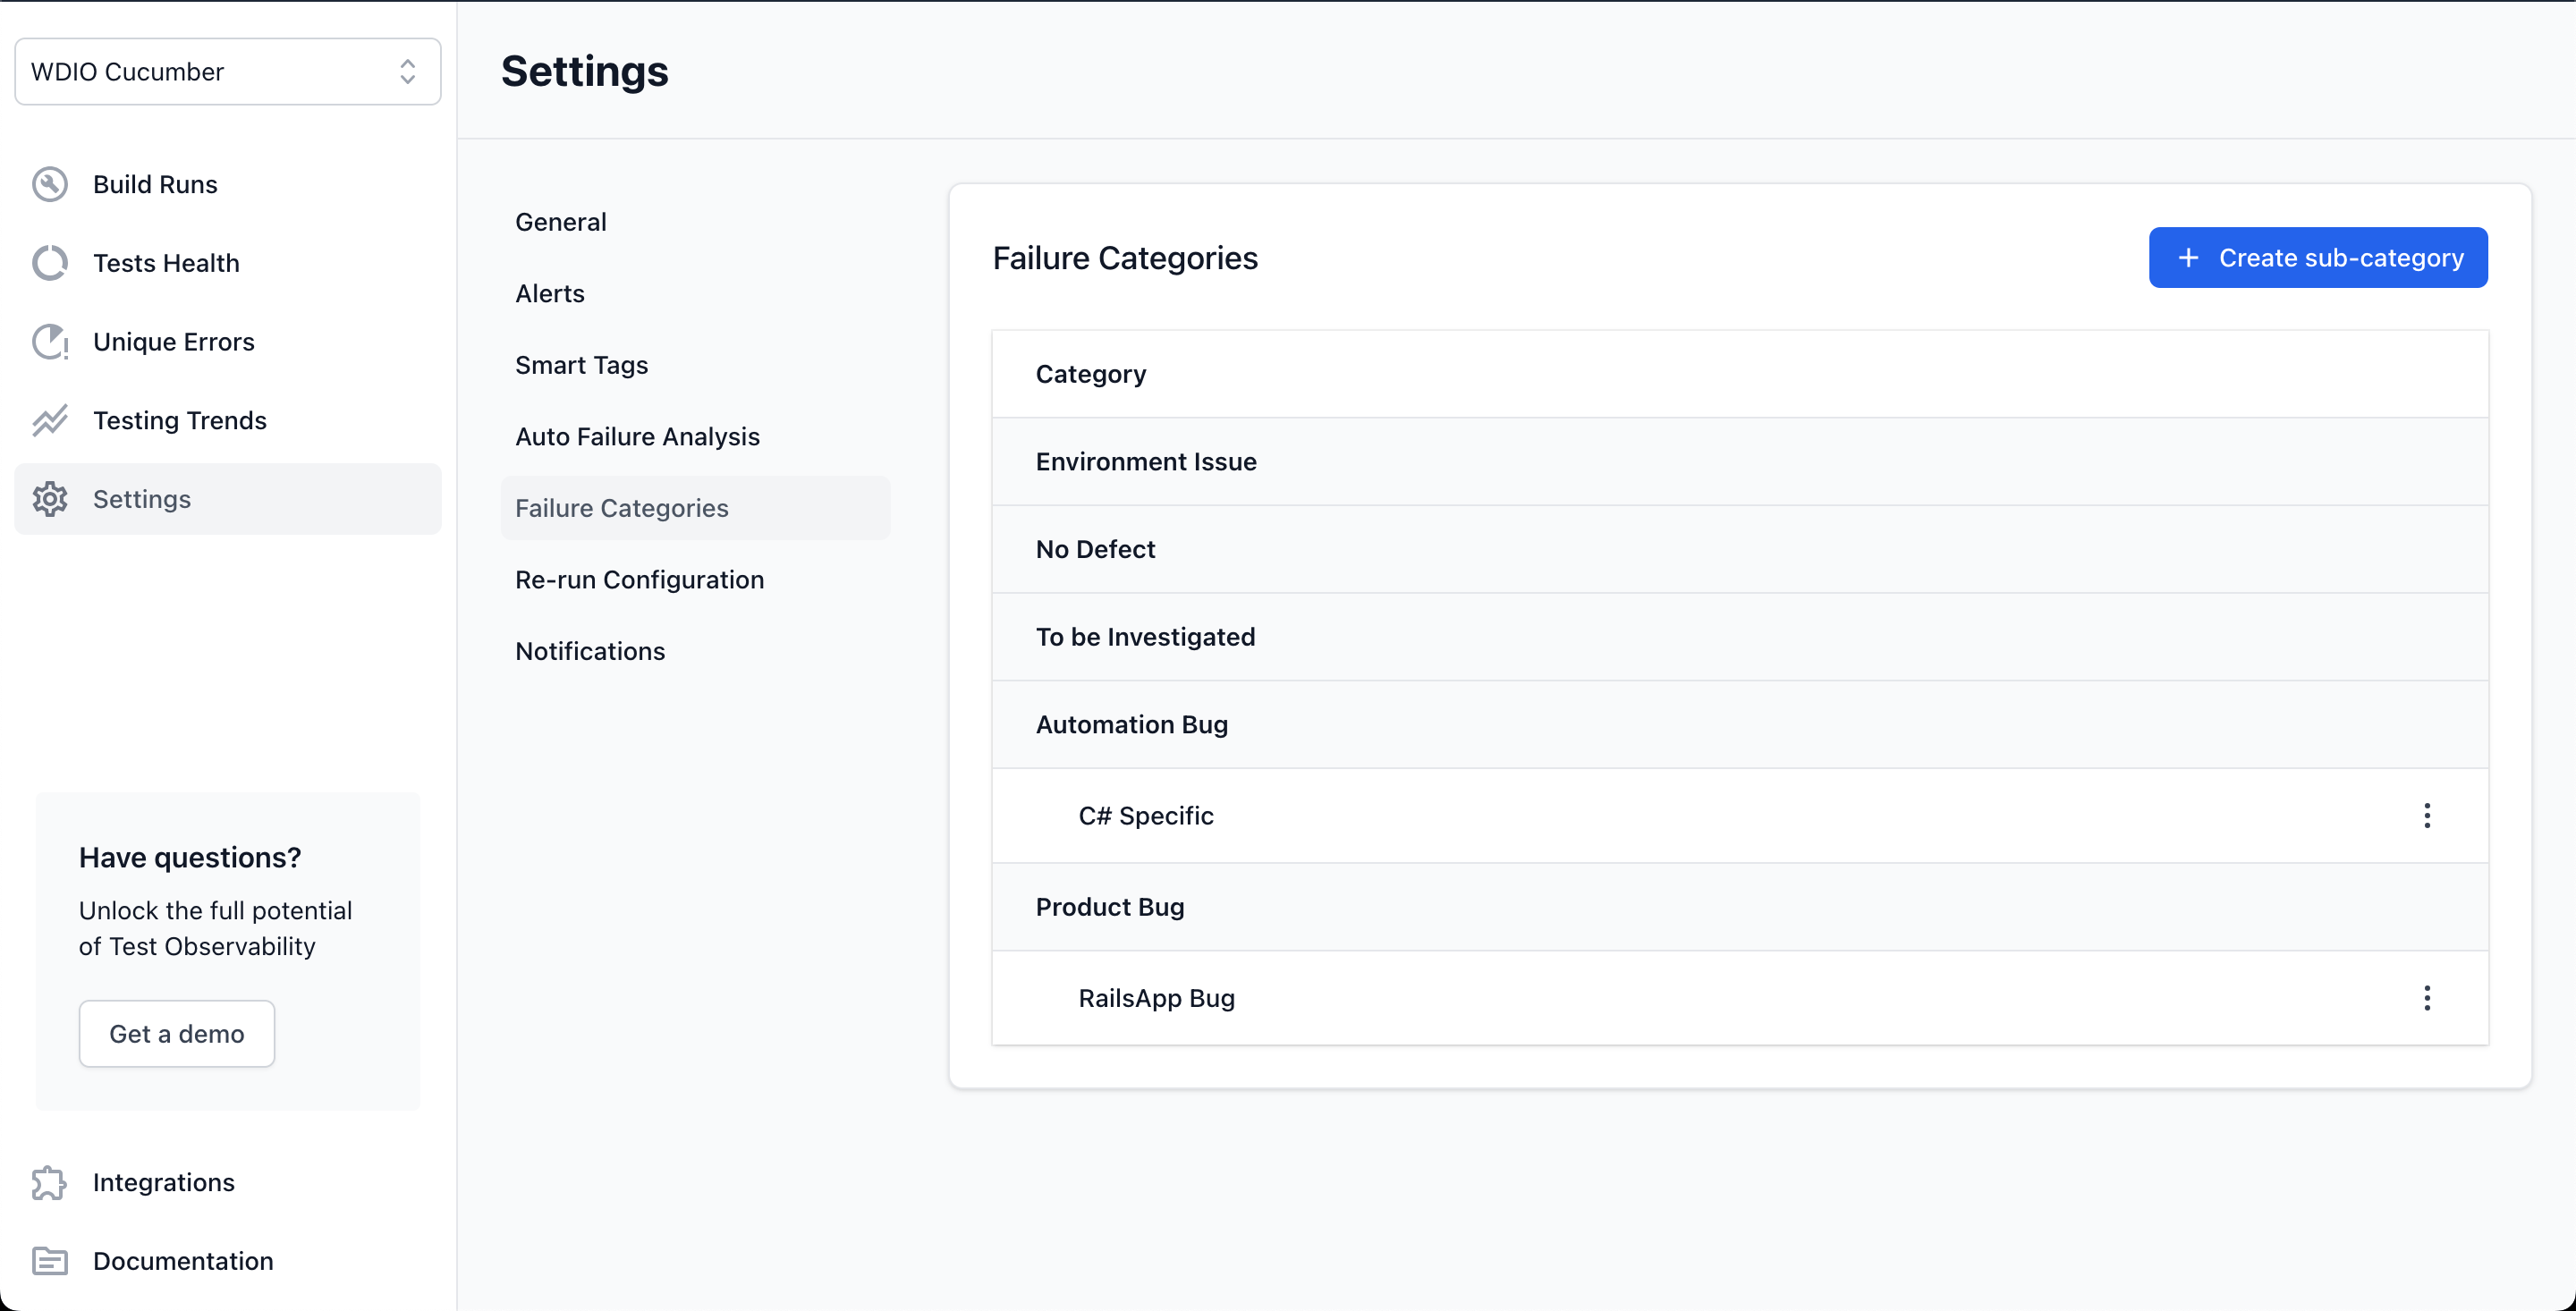 Custom Categories - Settings